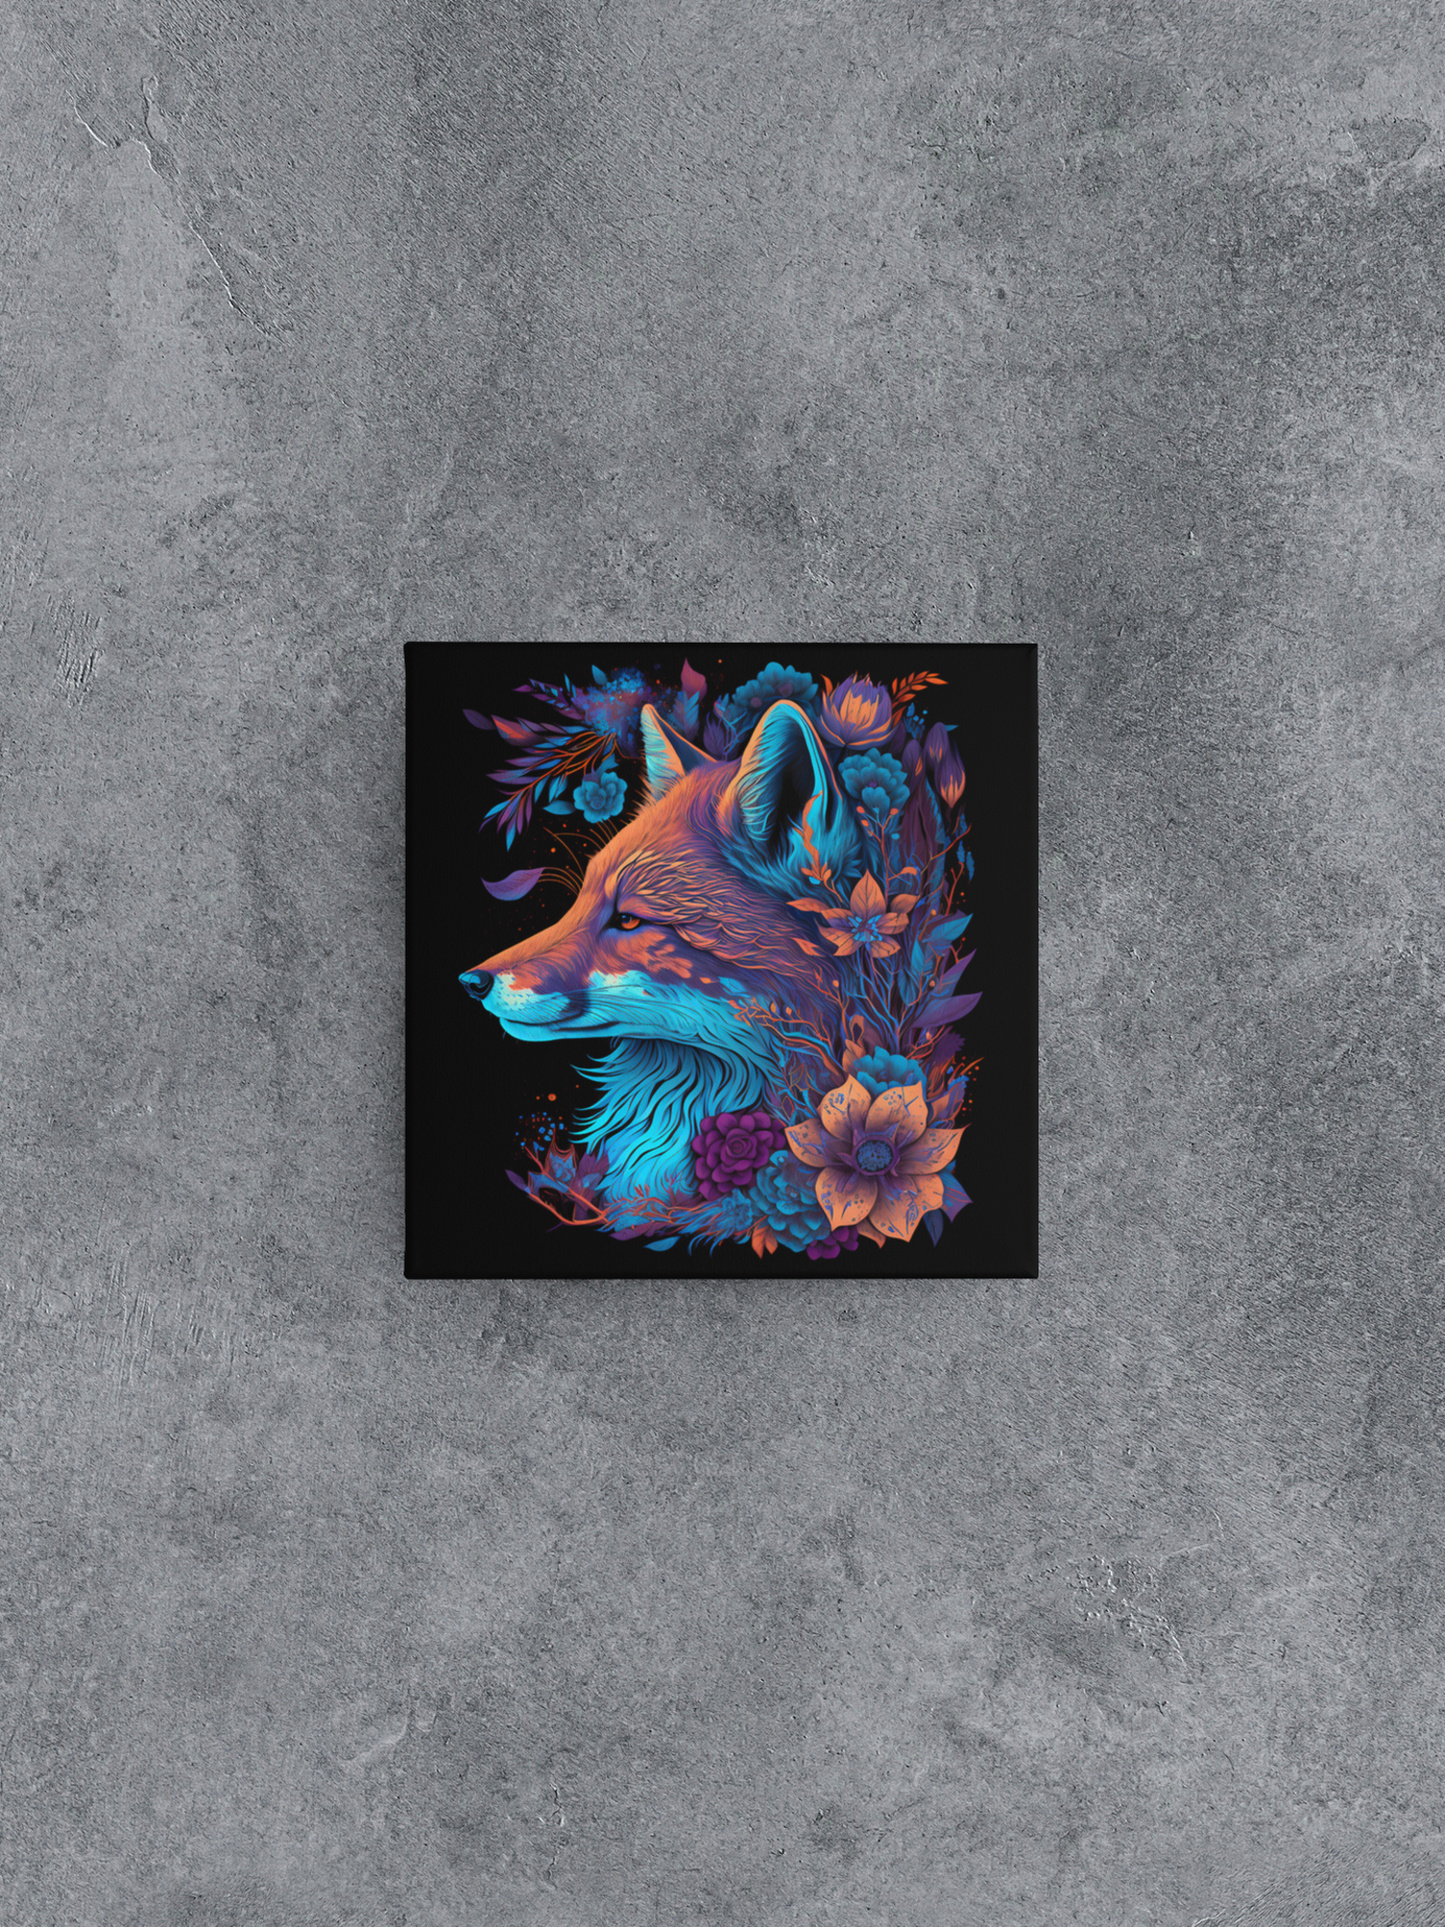 Black Light Fox with Flowers Canvas Wall Art, Neon Fox with Flowers Canvas Painting, Majestic Fox Painting, Colorful Flowered Fox Canvas